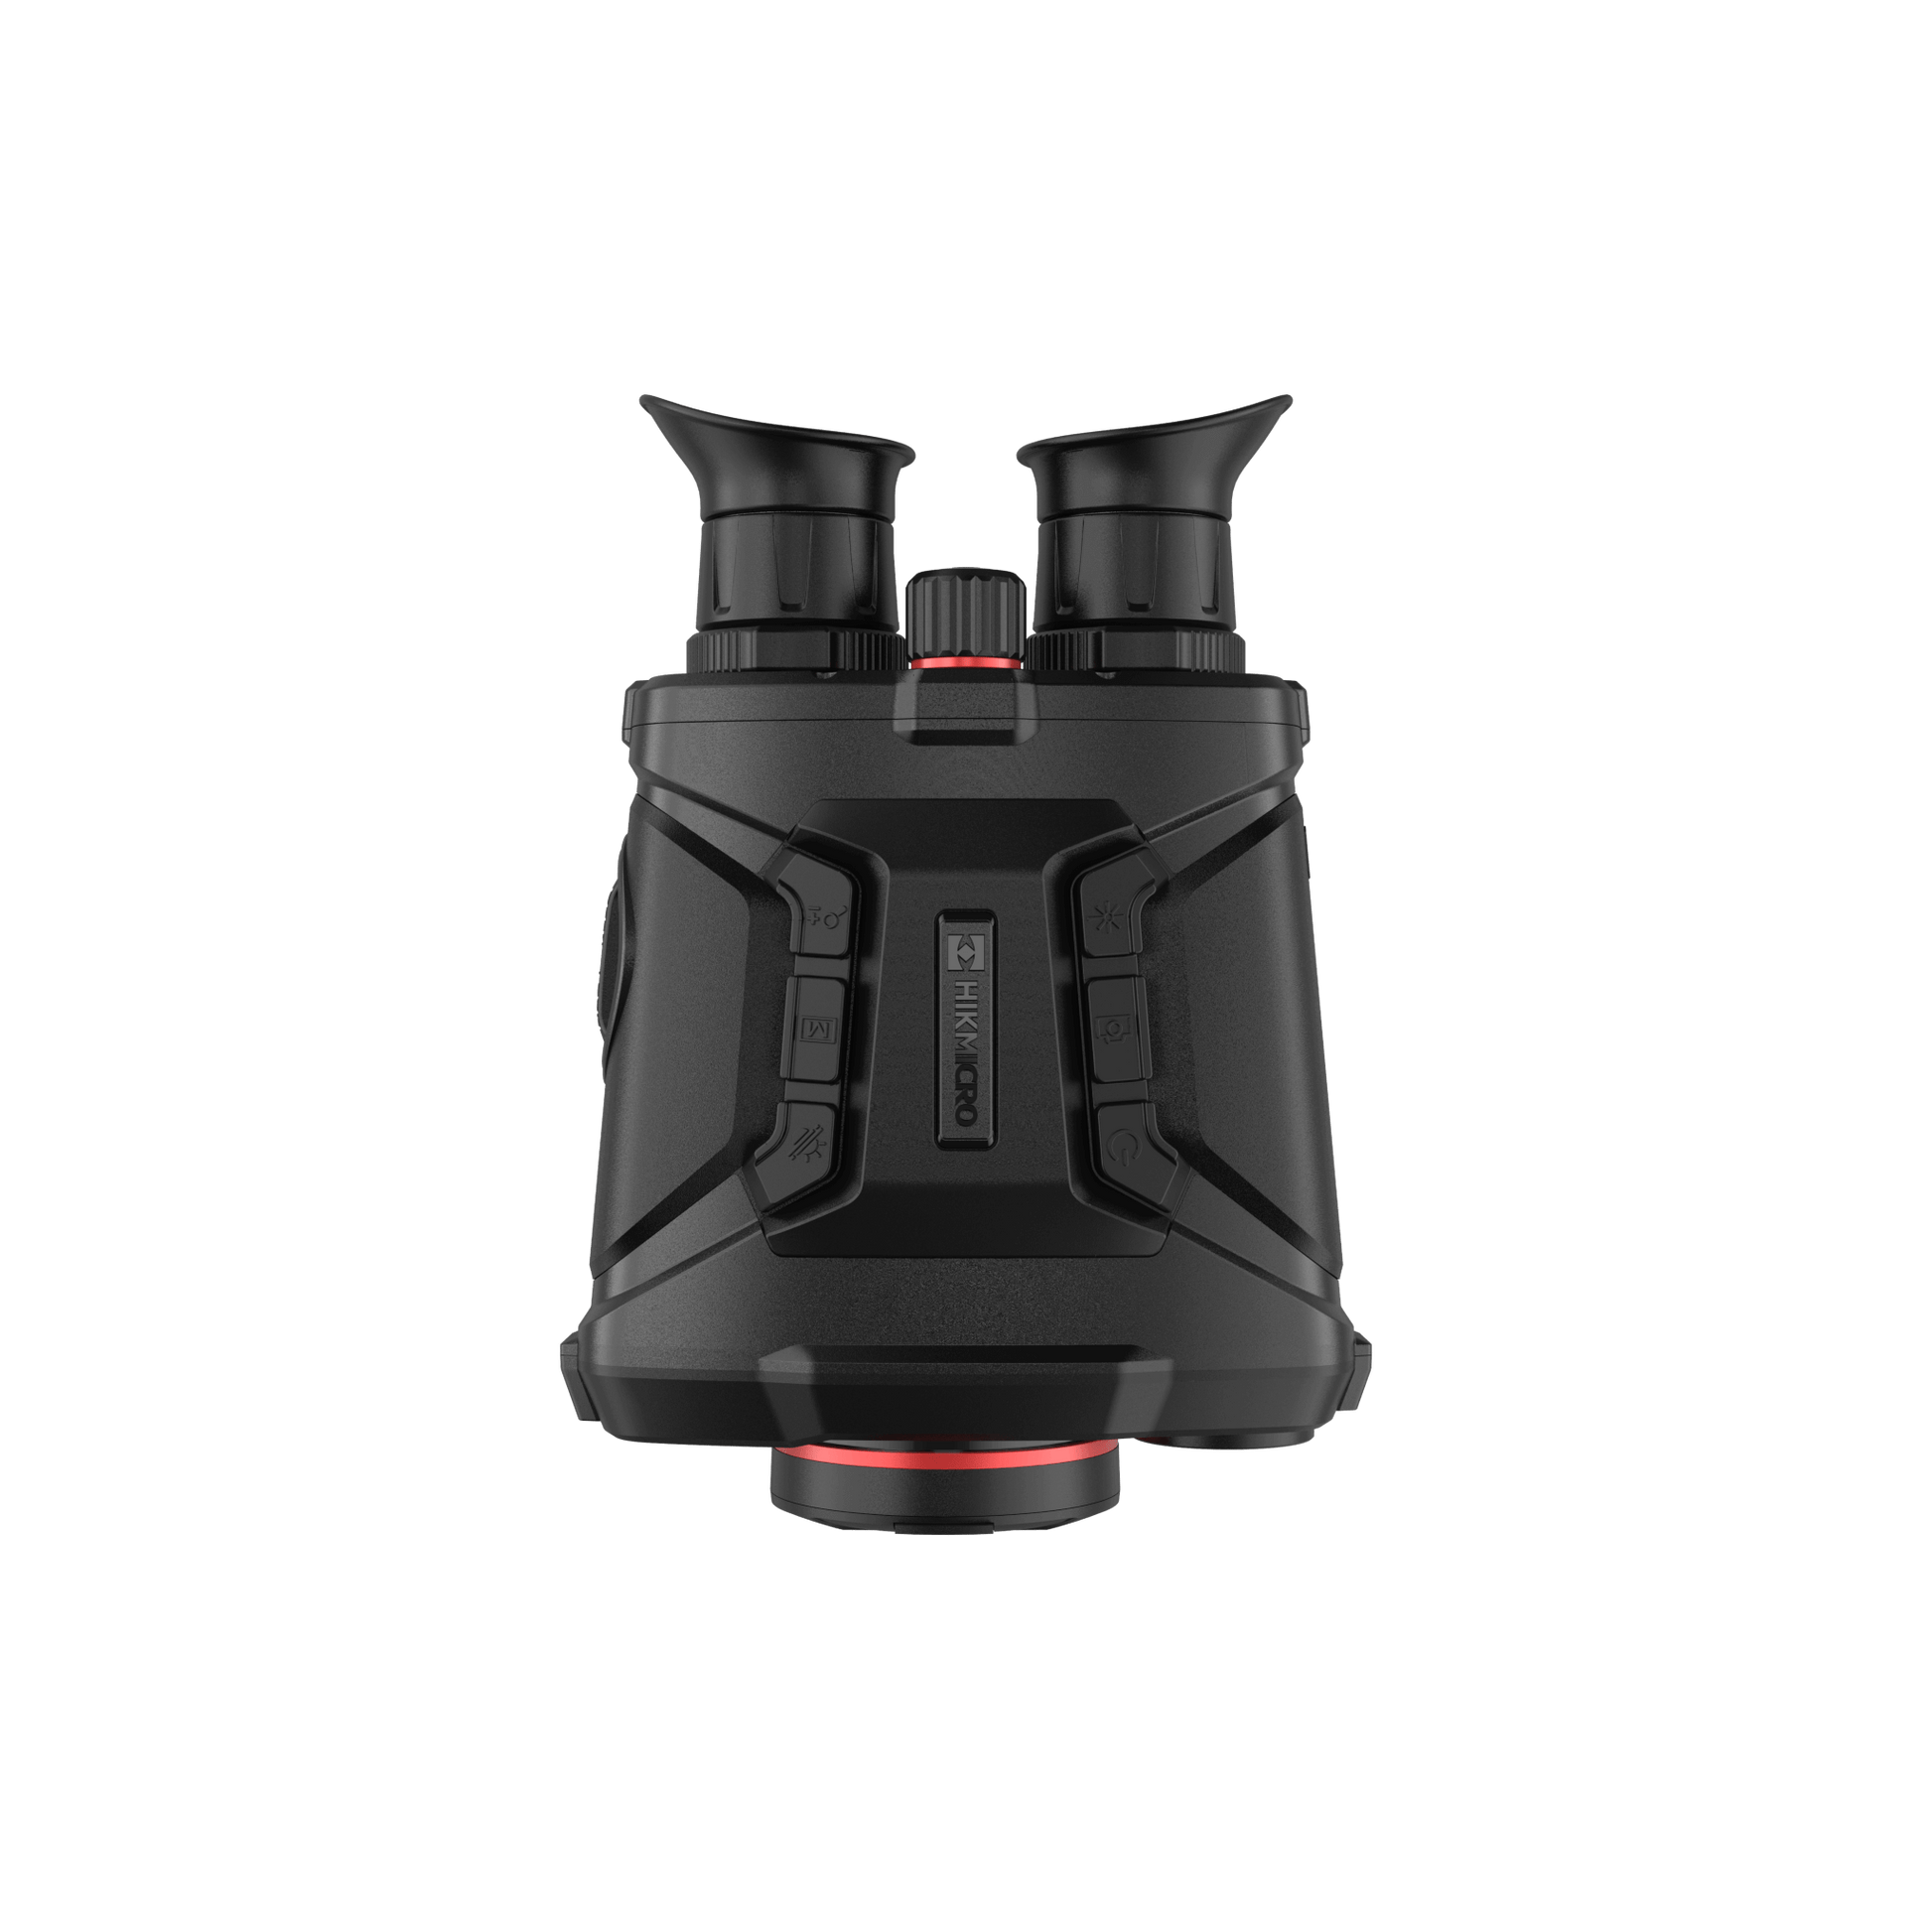 HikMicro Raptor RH50 handheld thermal binocular with infrared and optical capabilities - Top view